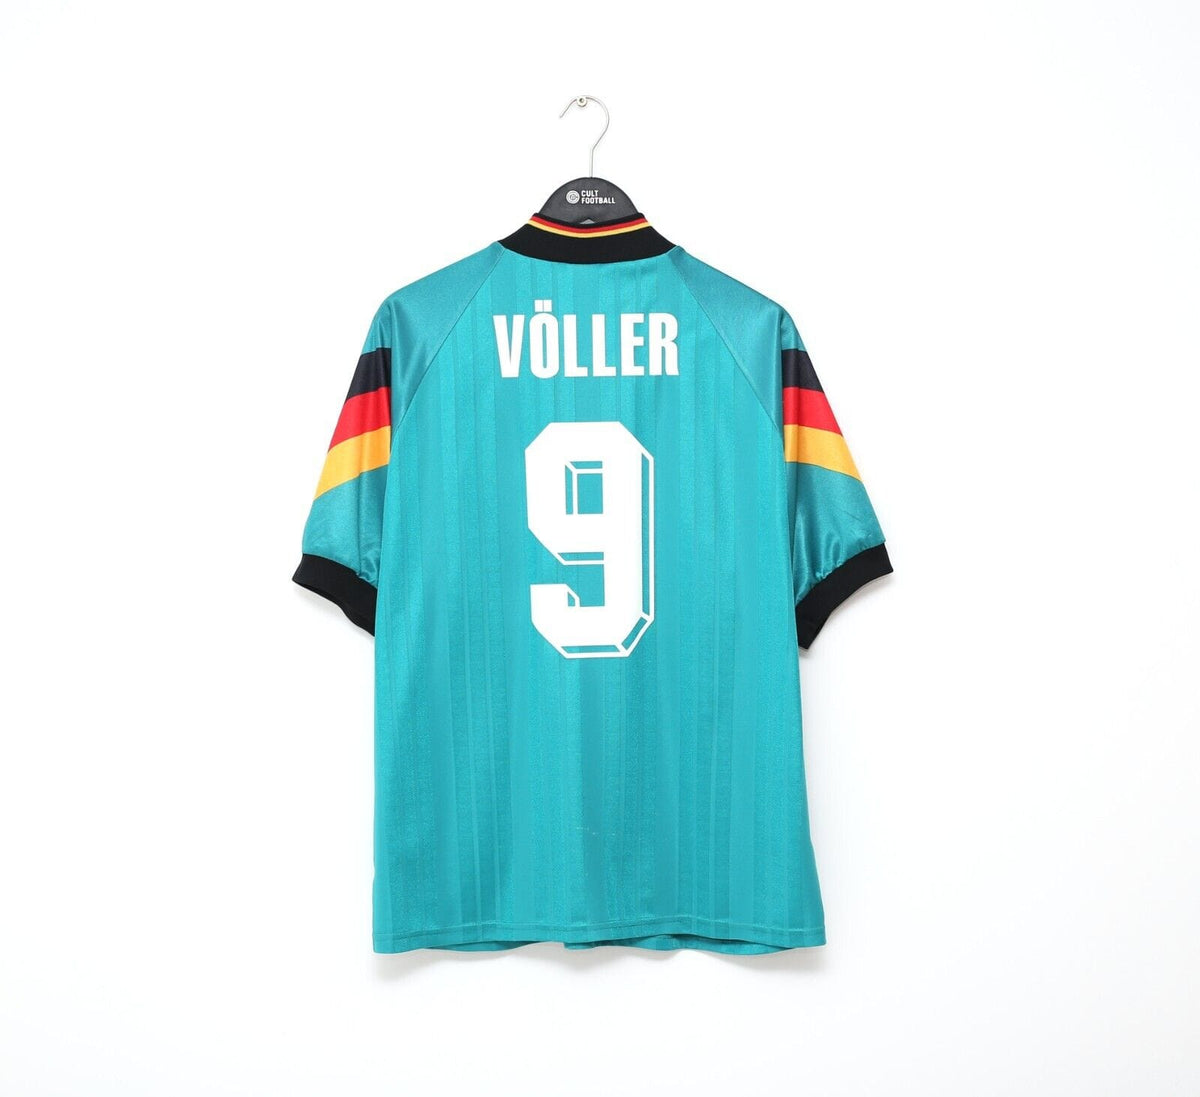 Germany's legendary defenders' football shirts